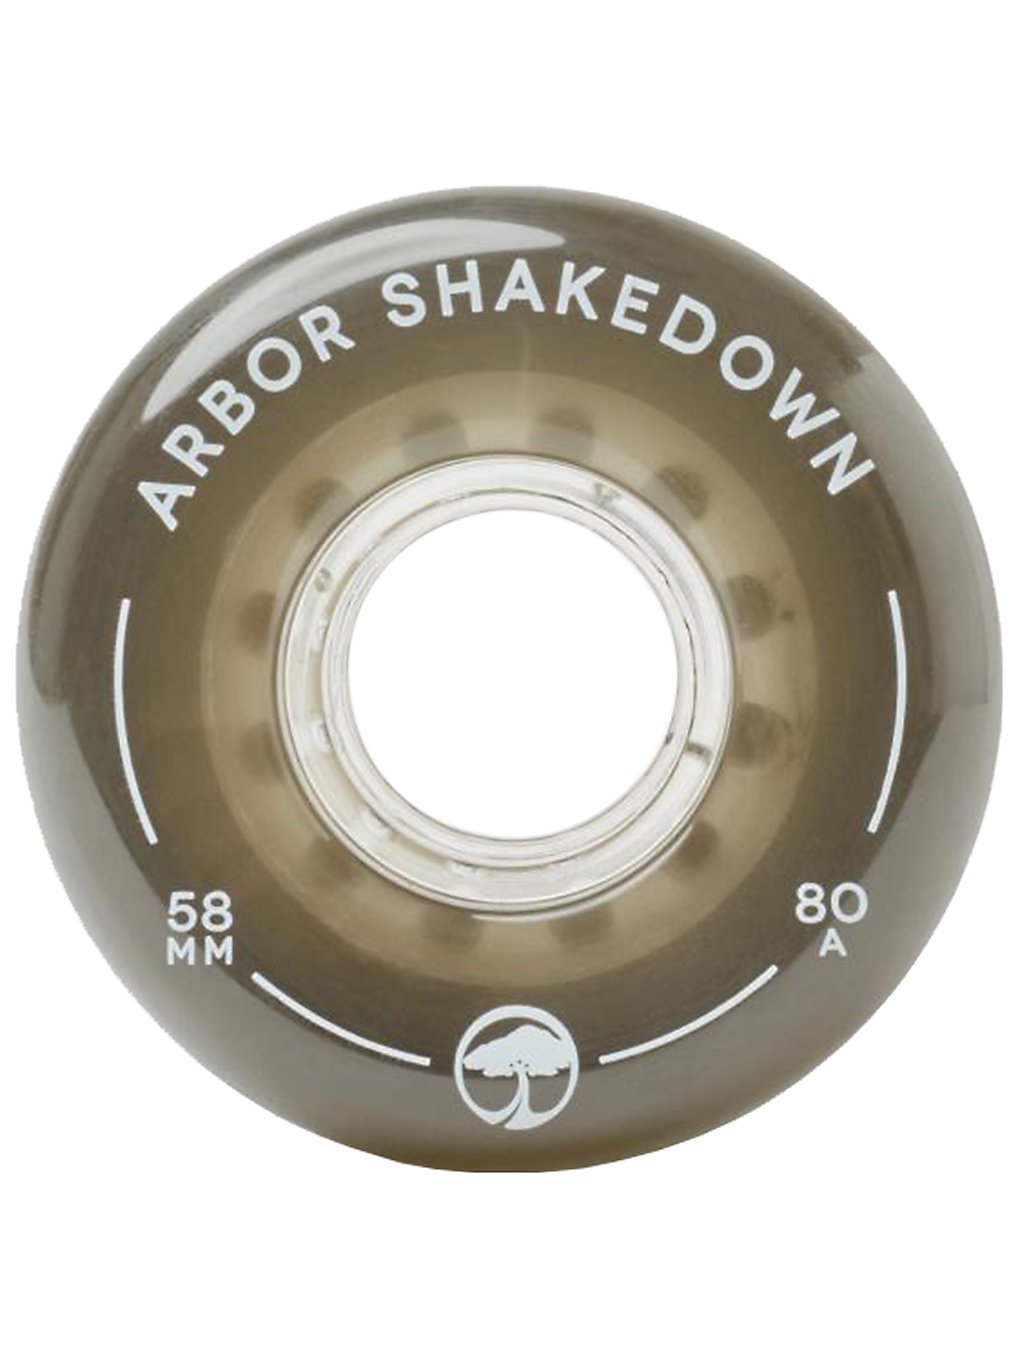 Arbor Shakedown 80a 58mm Rollen ghost black kaufen